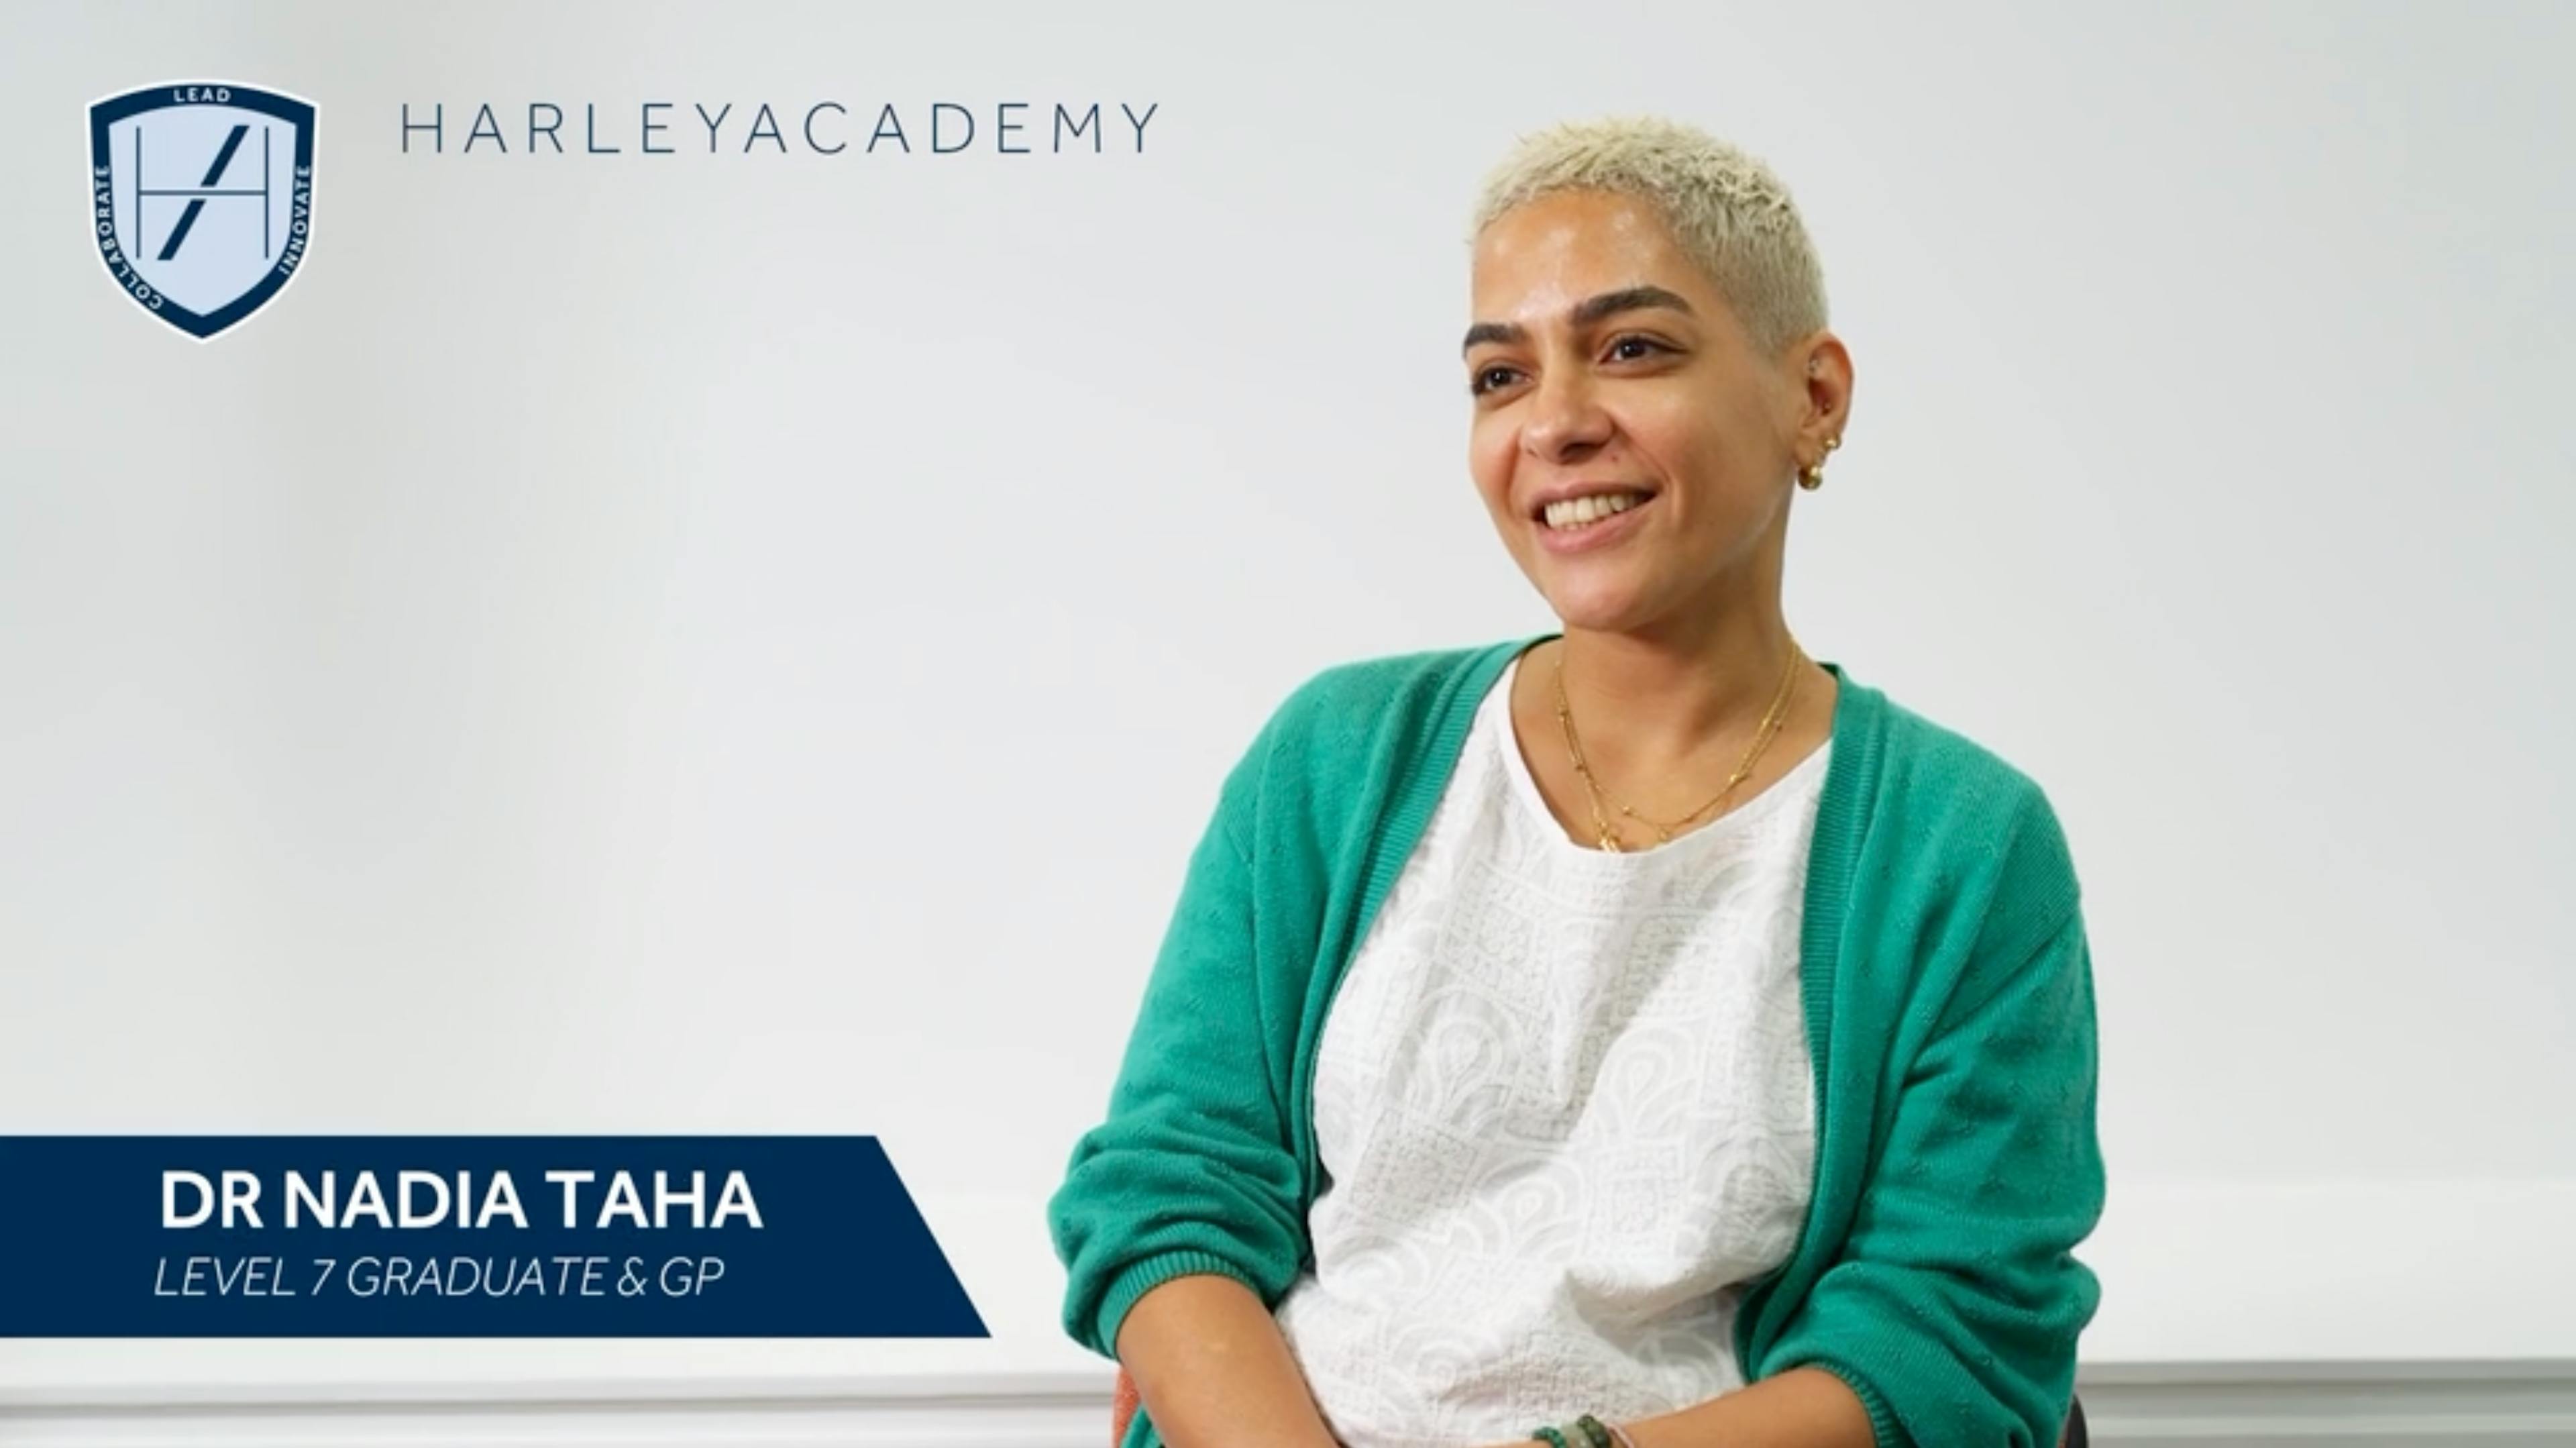 Dr Nadia Taha's testimonial video cover